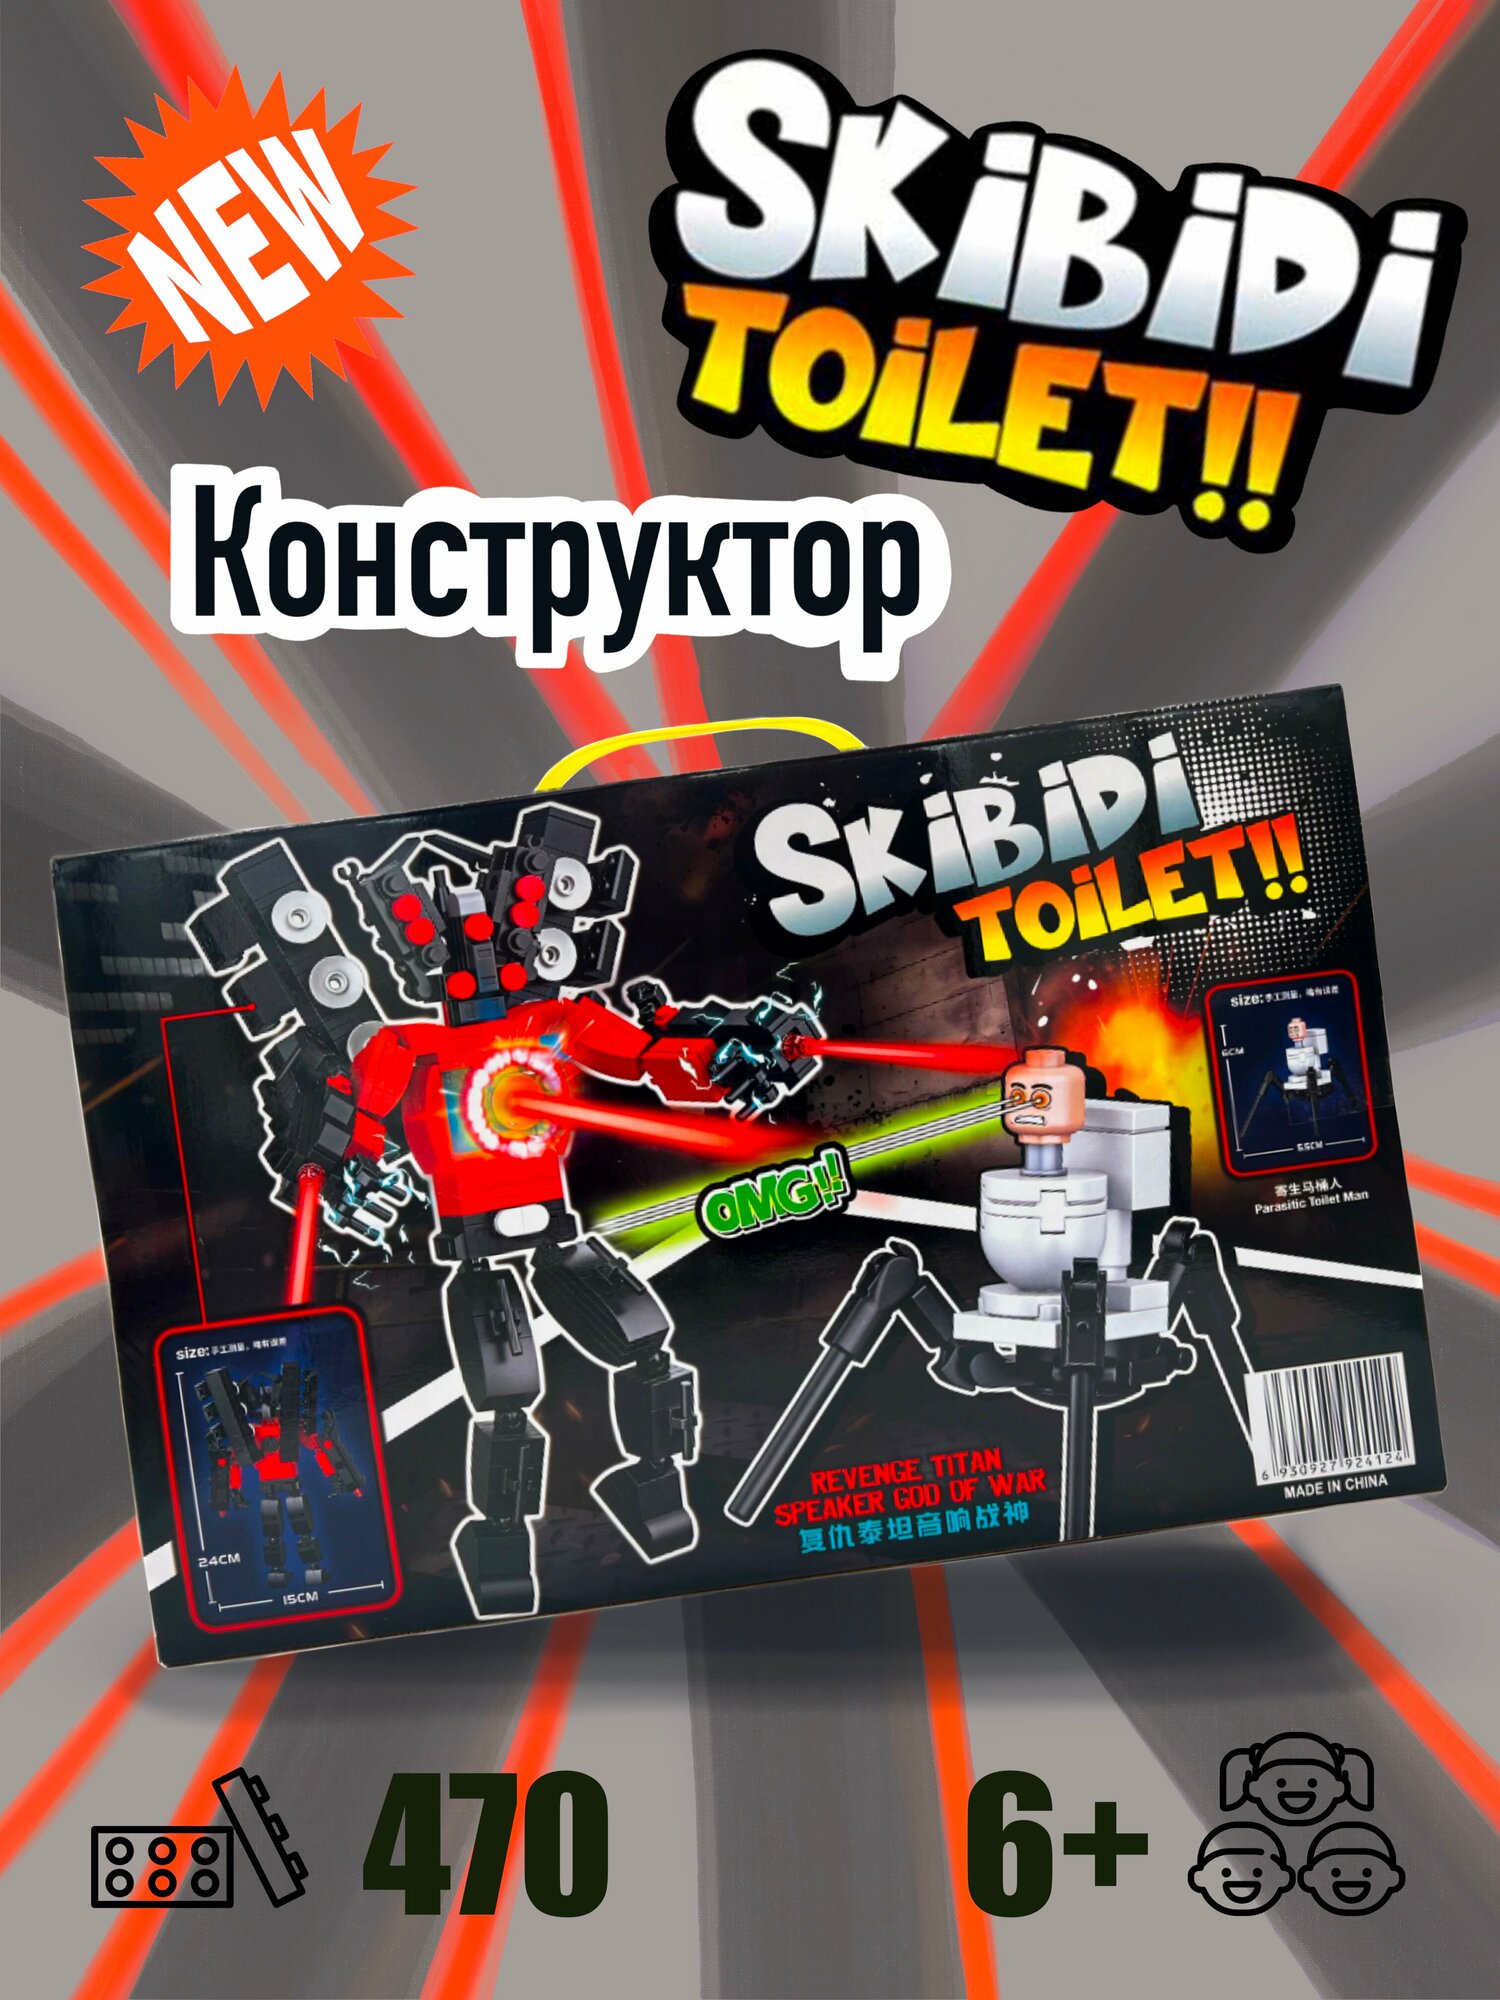 Конструктор Skibidi Toilet / СпикерМен Титан 2.0 vs Скибиди Туалет Паук / 470 деталей